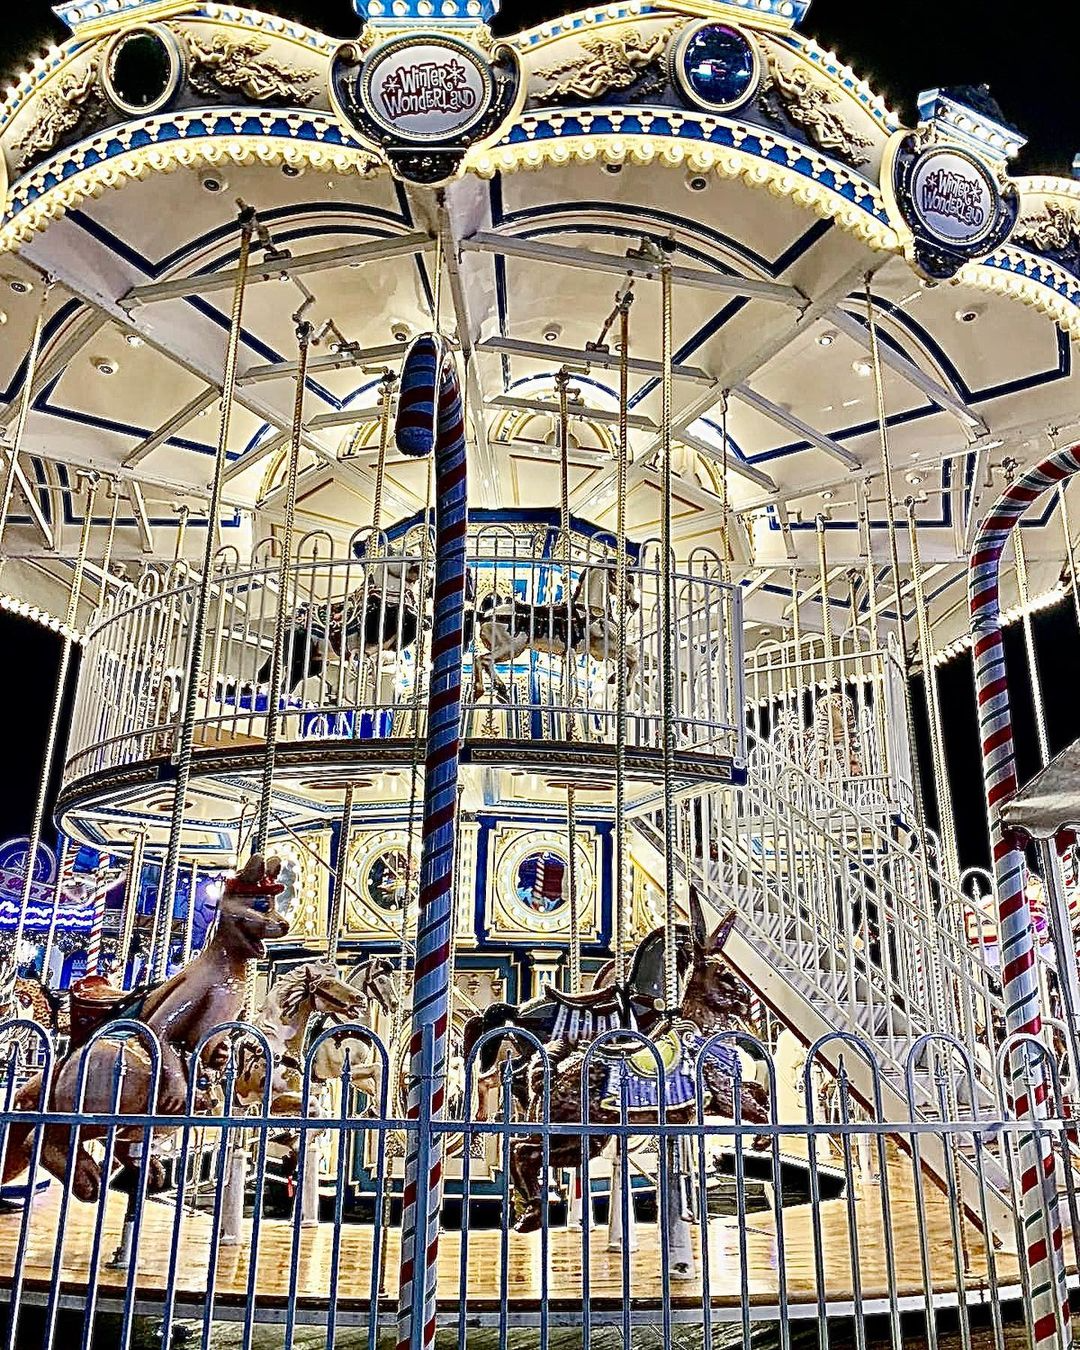 Amusement Carousel Rides